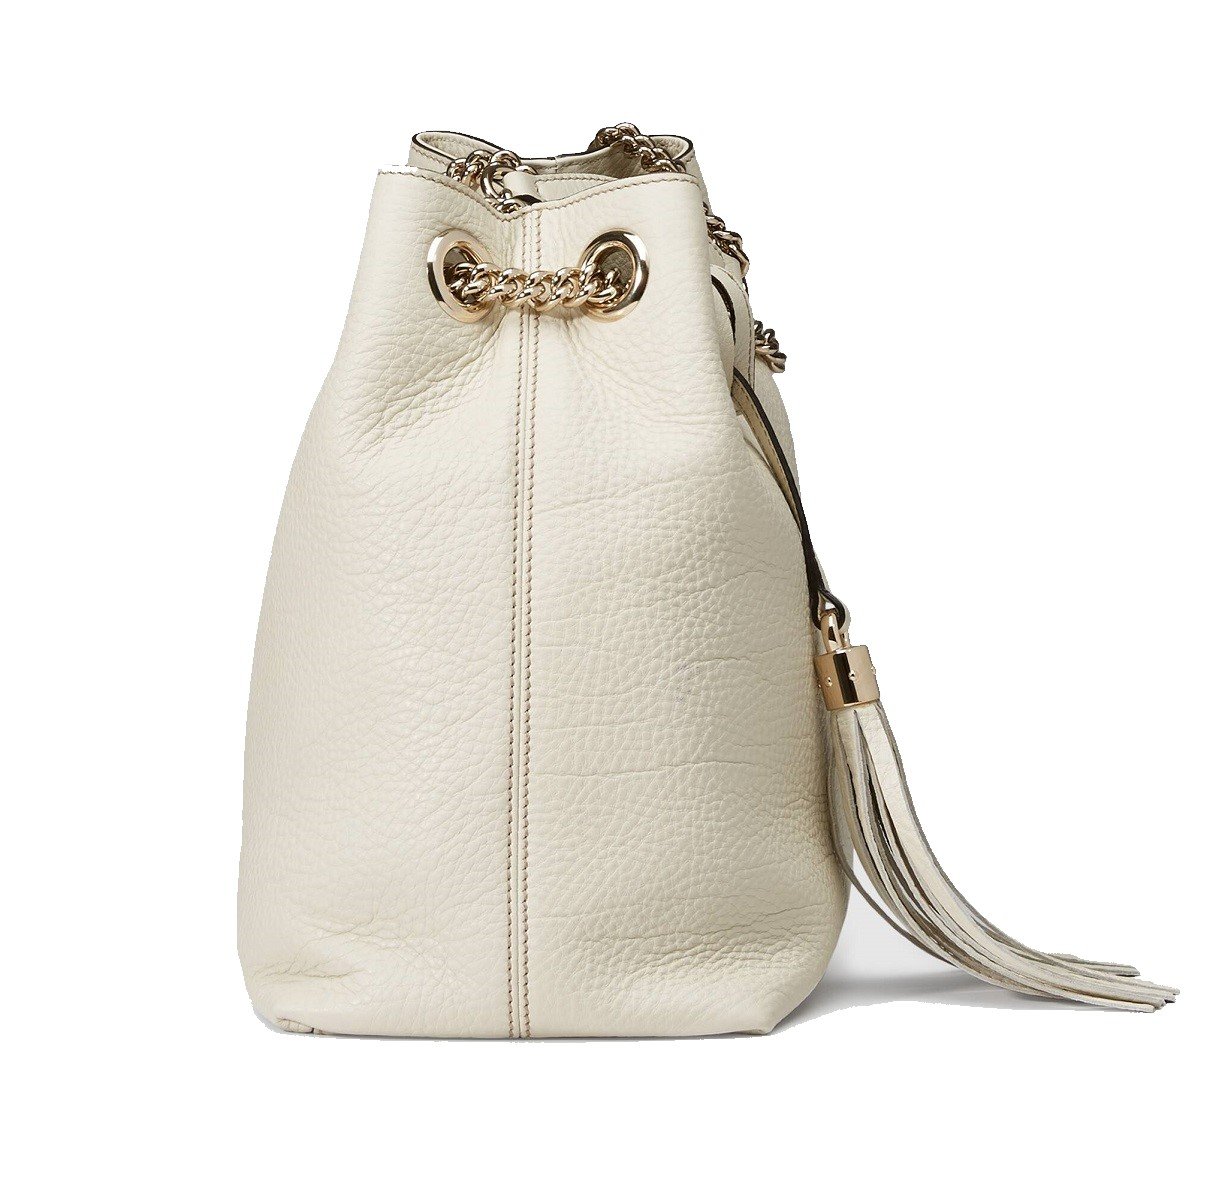 Gucci Soho GG Ivory Leather Chain Shoulder Bag 536196 - LUXURYMRKT